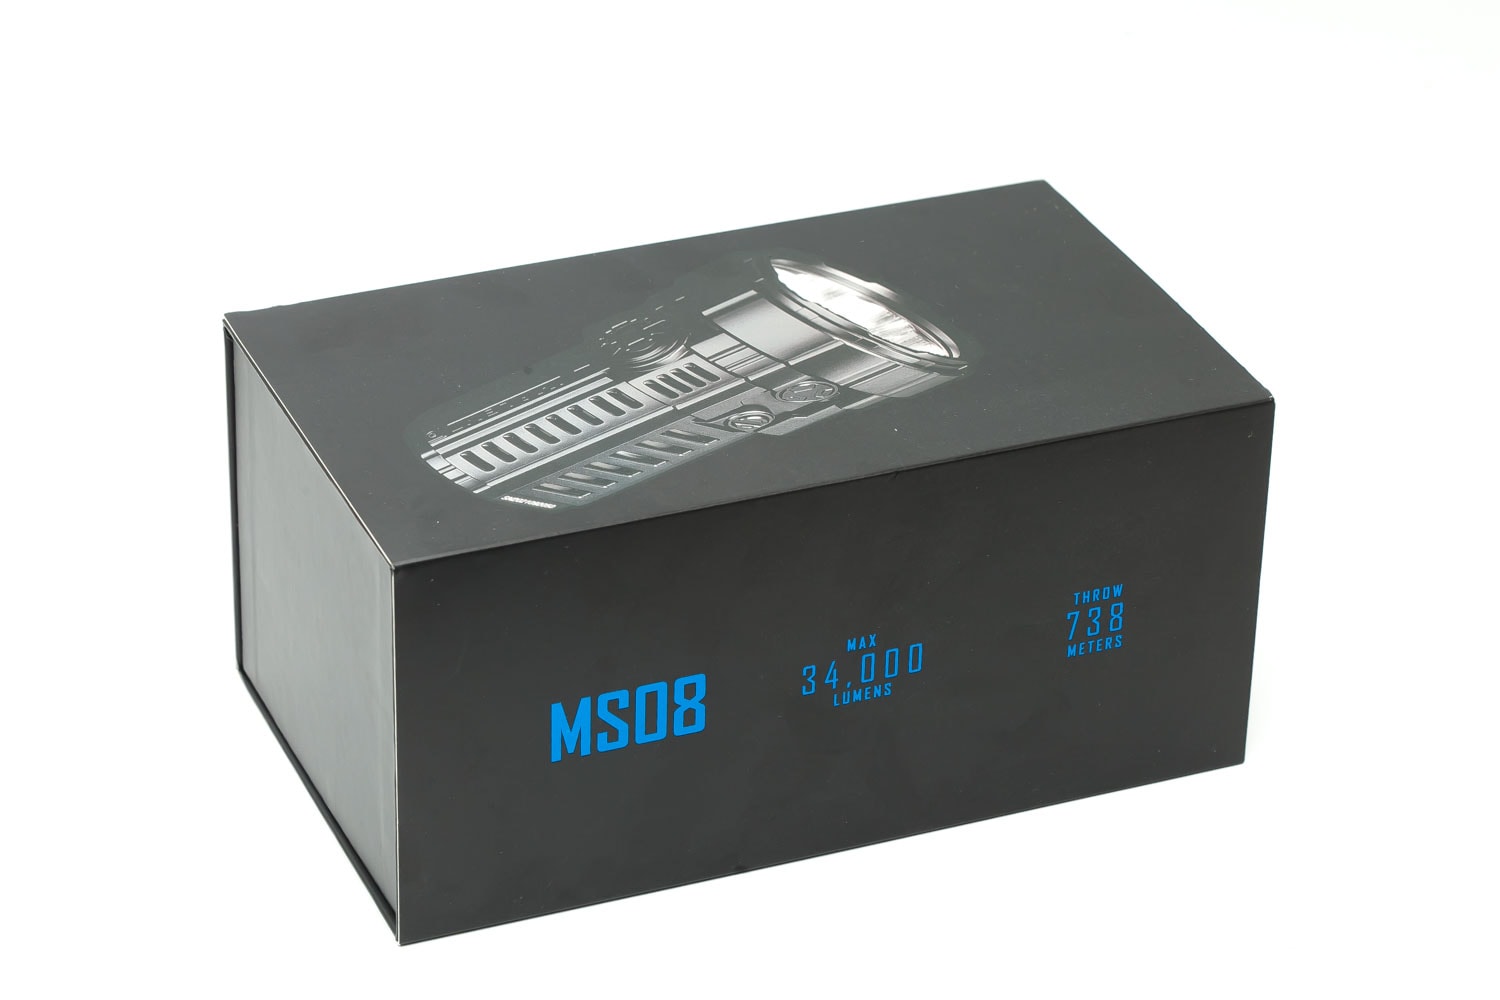 Olight MS08 box